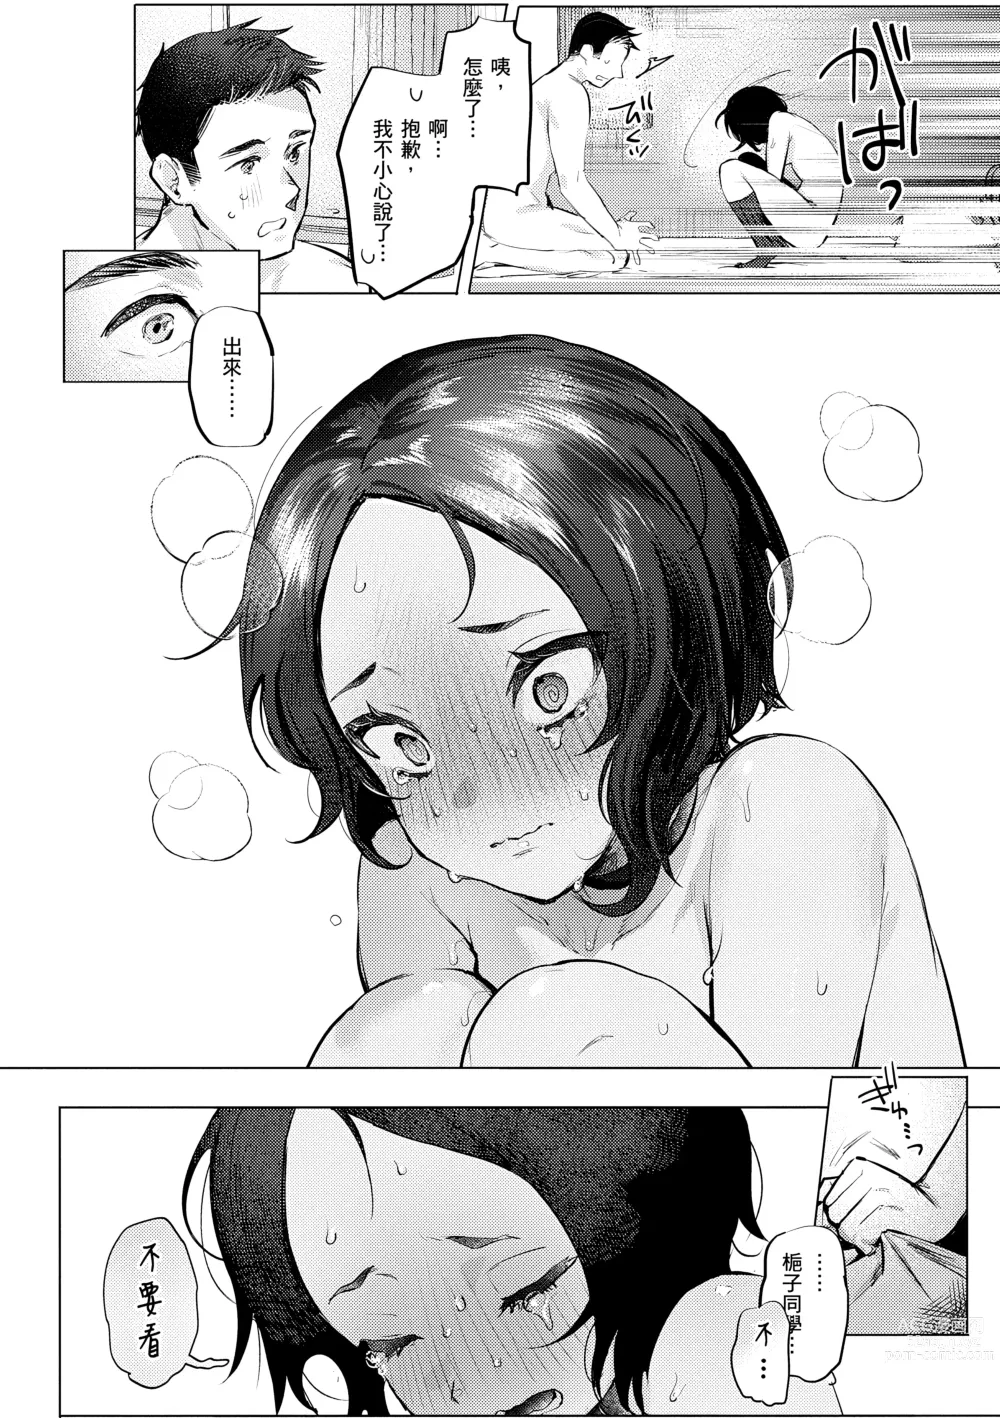 Page 154 of manga 肉食系草莓蛋糕 (decensored)